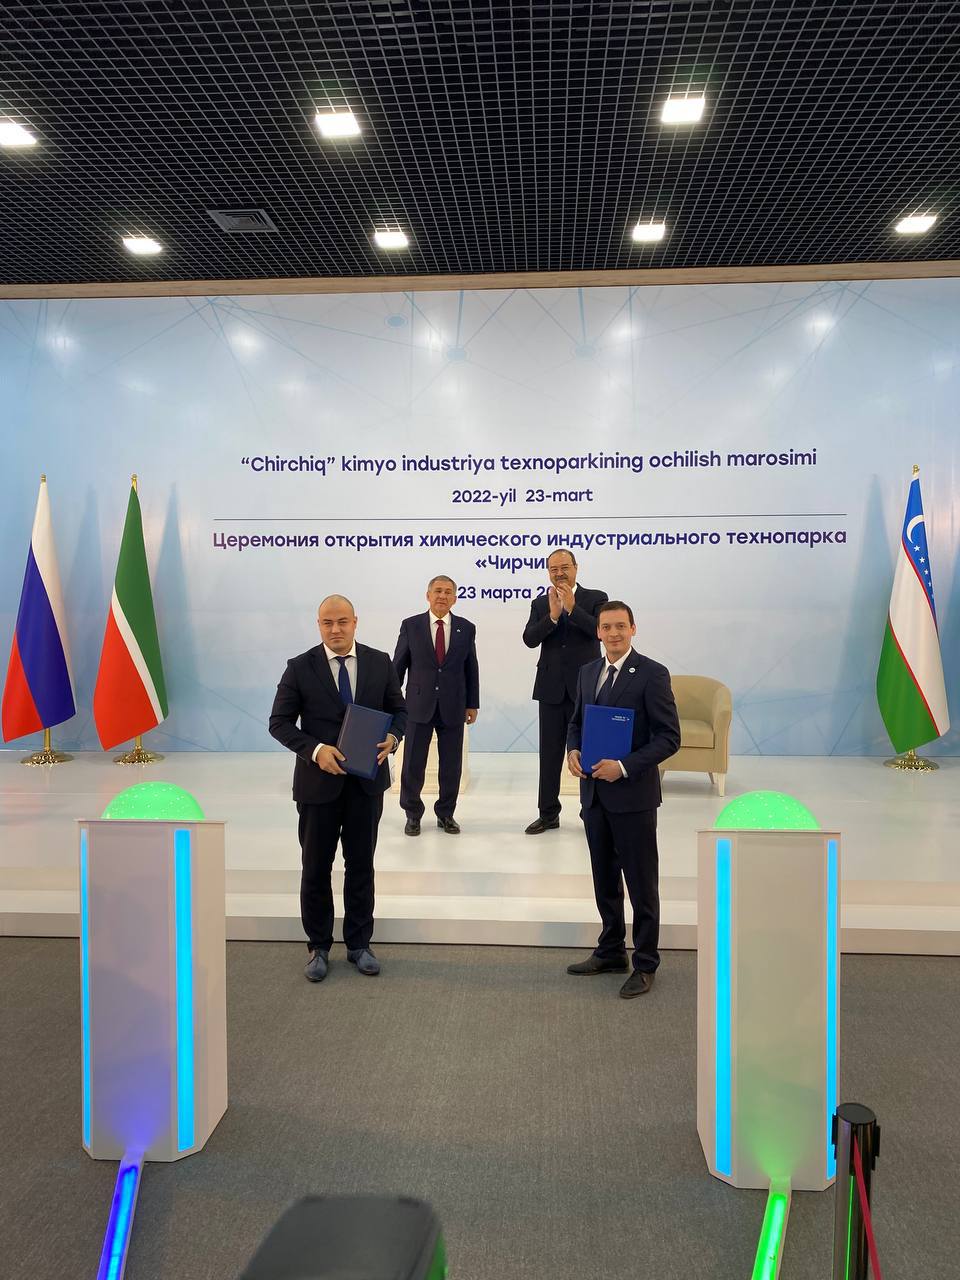 Natural Health получила статус первого резидента новейшего технопарка "Чирчик" в Узбекистане!